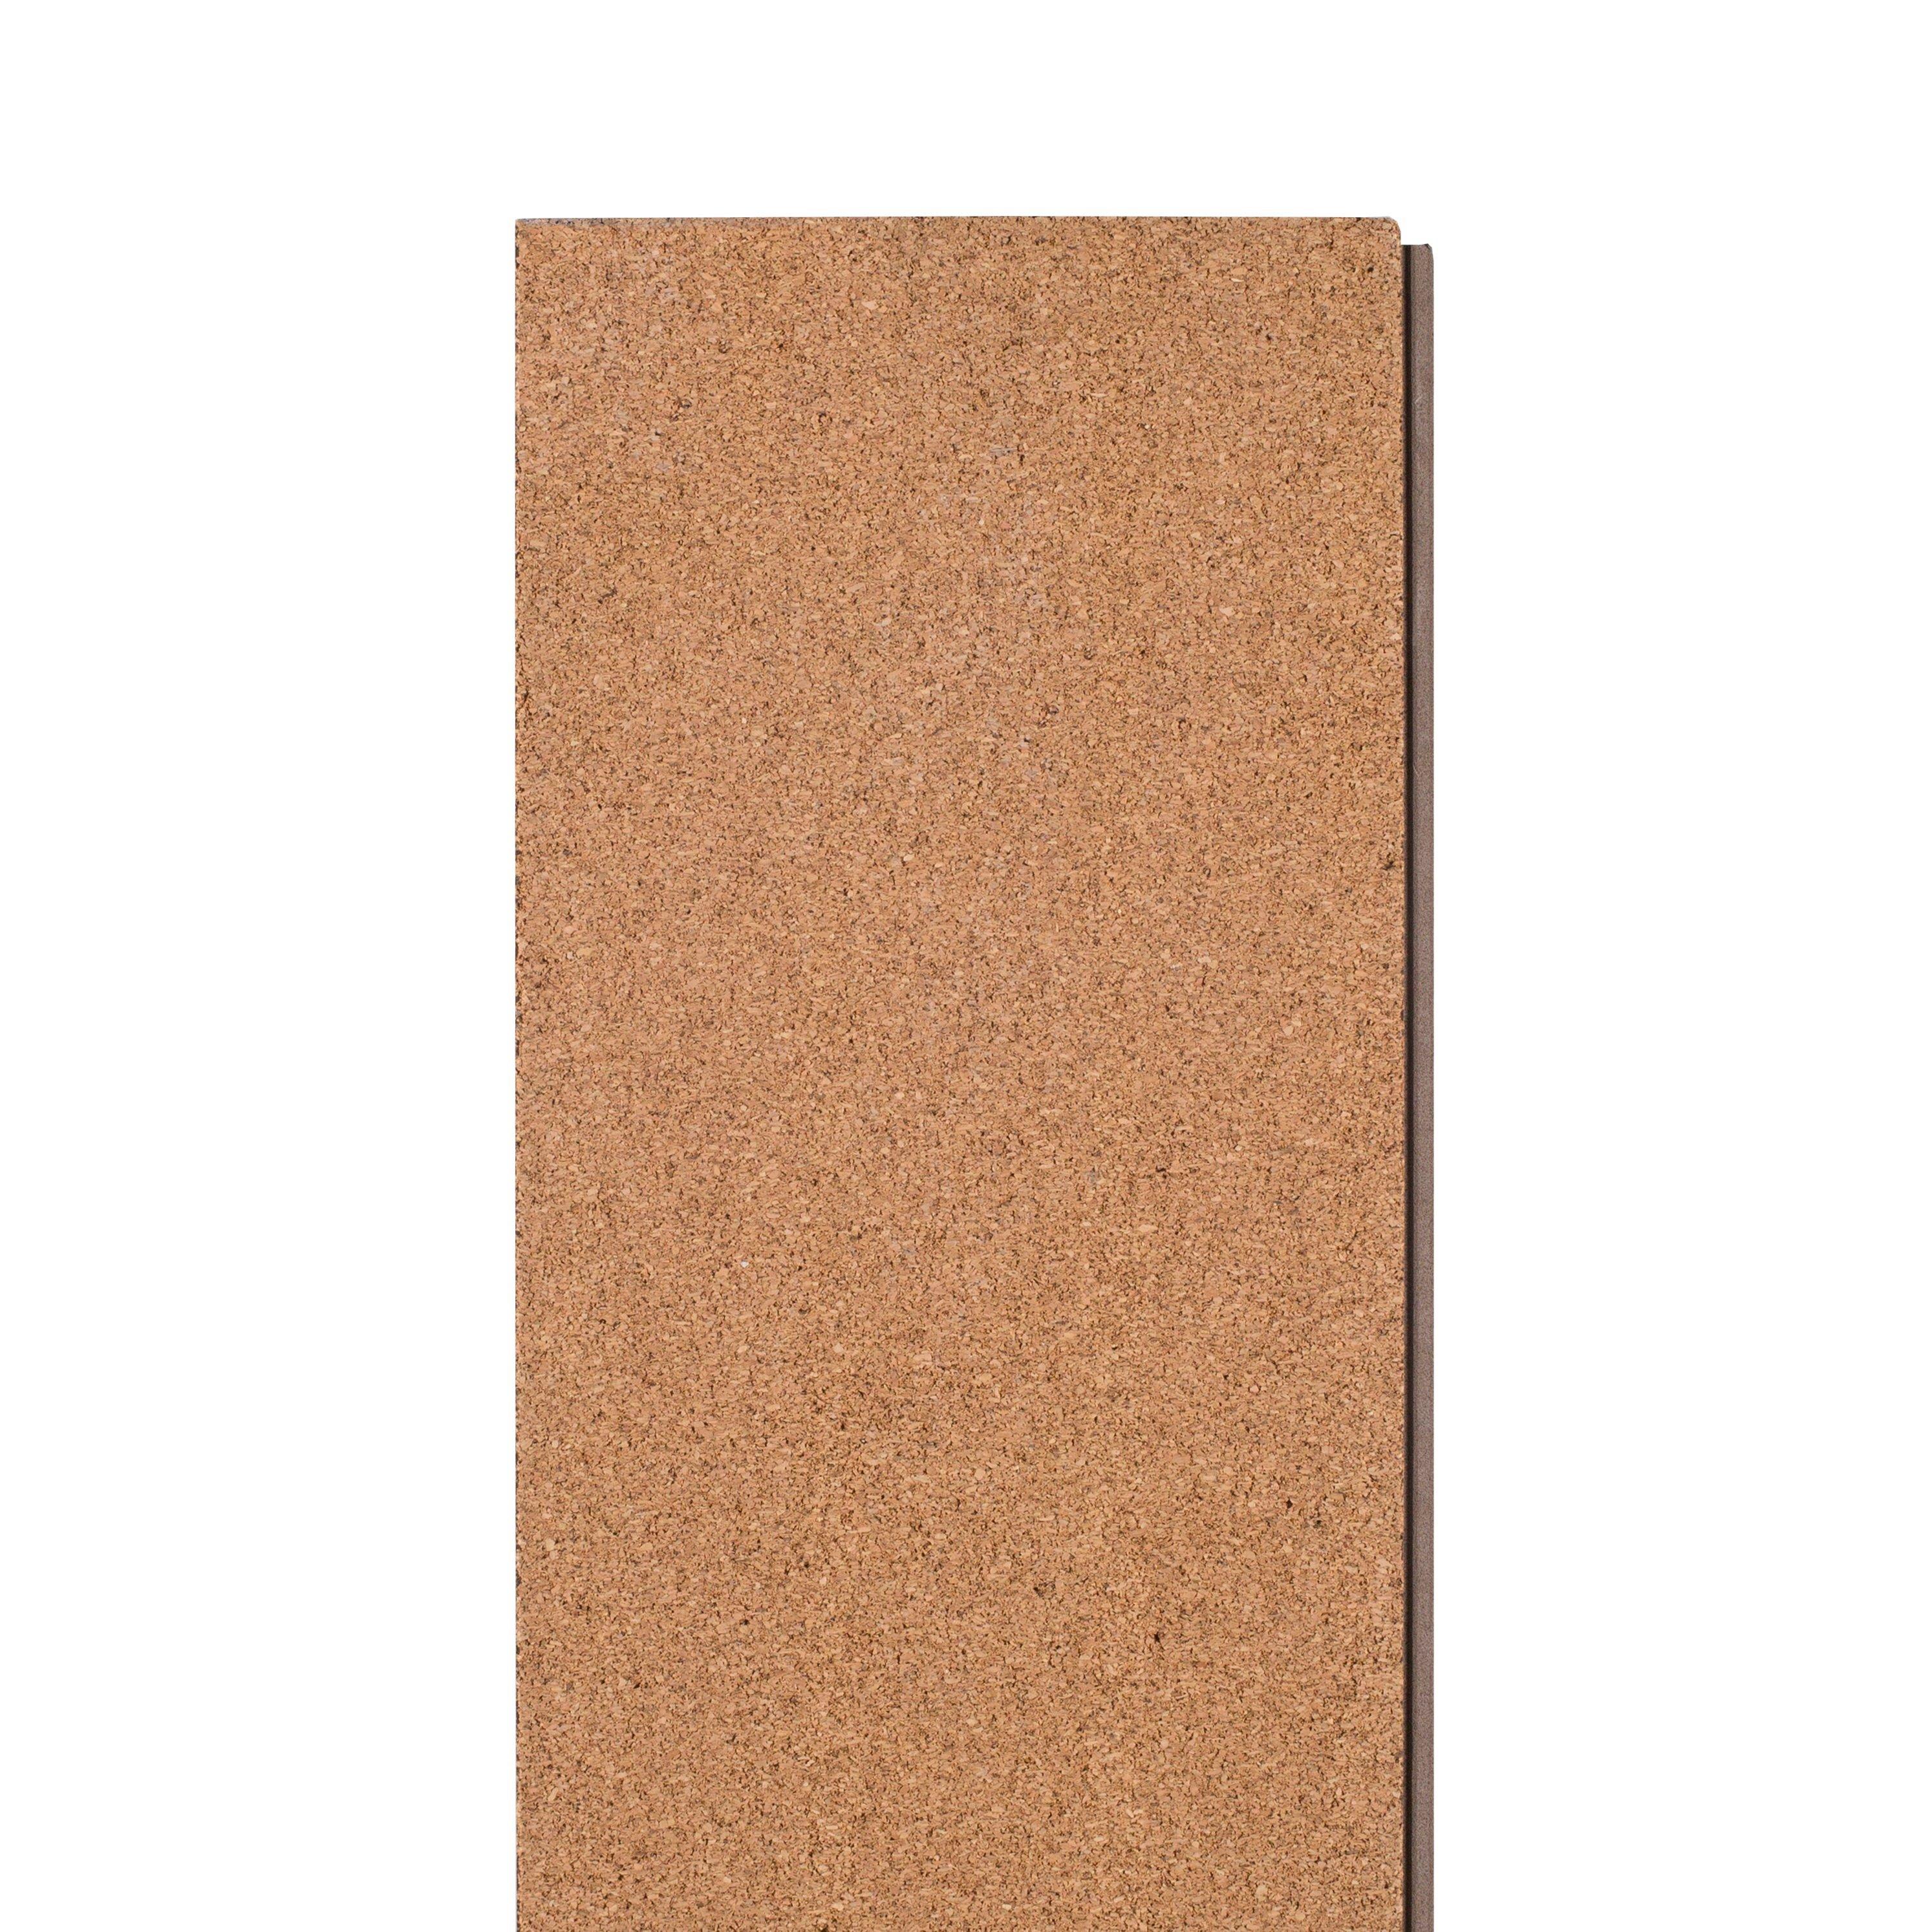 Seaside Ash Rigid Core Luxury Vinyl Plank - Cork Back